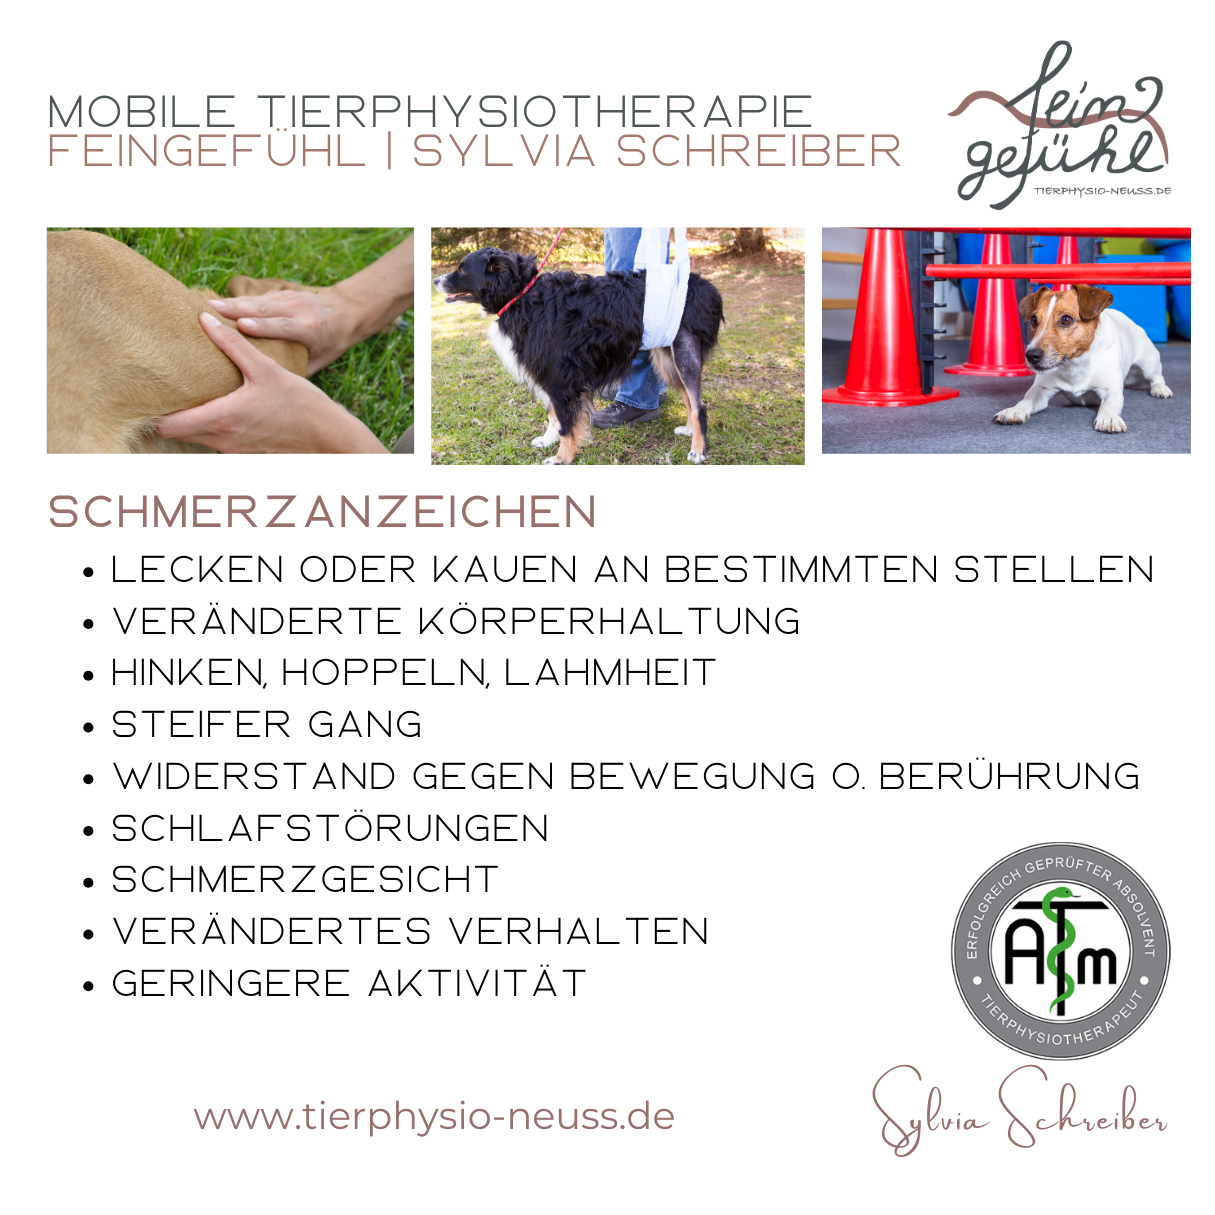 Tierphysiotherapie Feingefühl | mobile Tierphysiotherapie, Michaelstraße 9 in Neuss